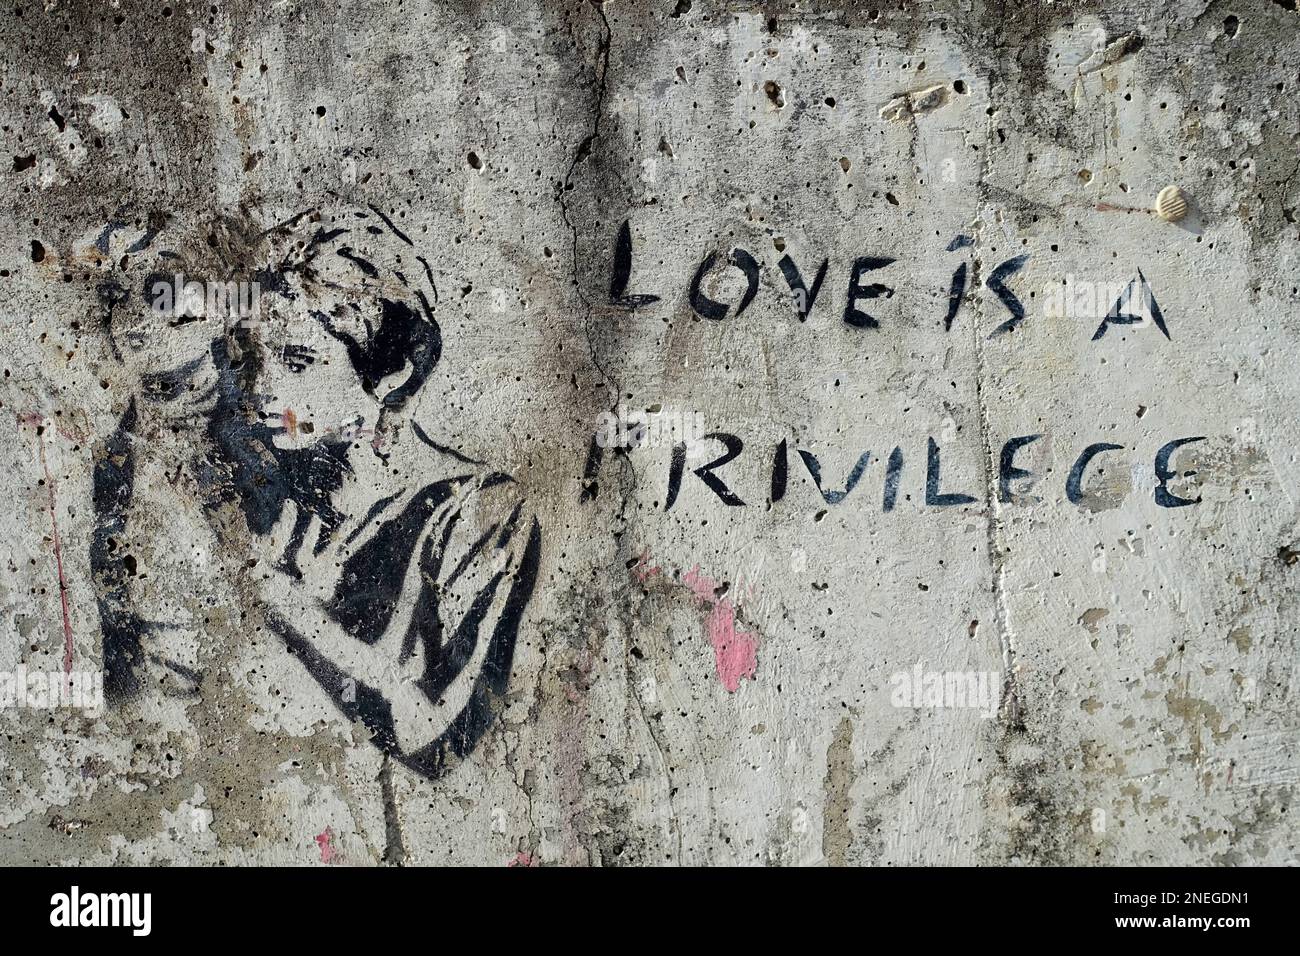 Love is a privilege, Stencil, public ground, Berlin Stock Photo